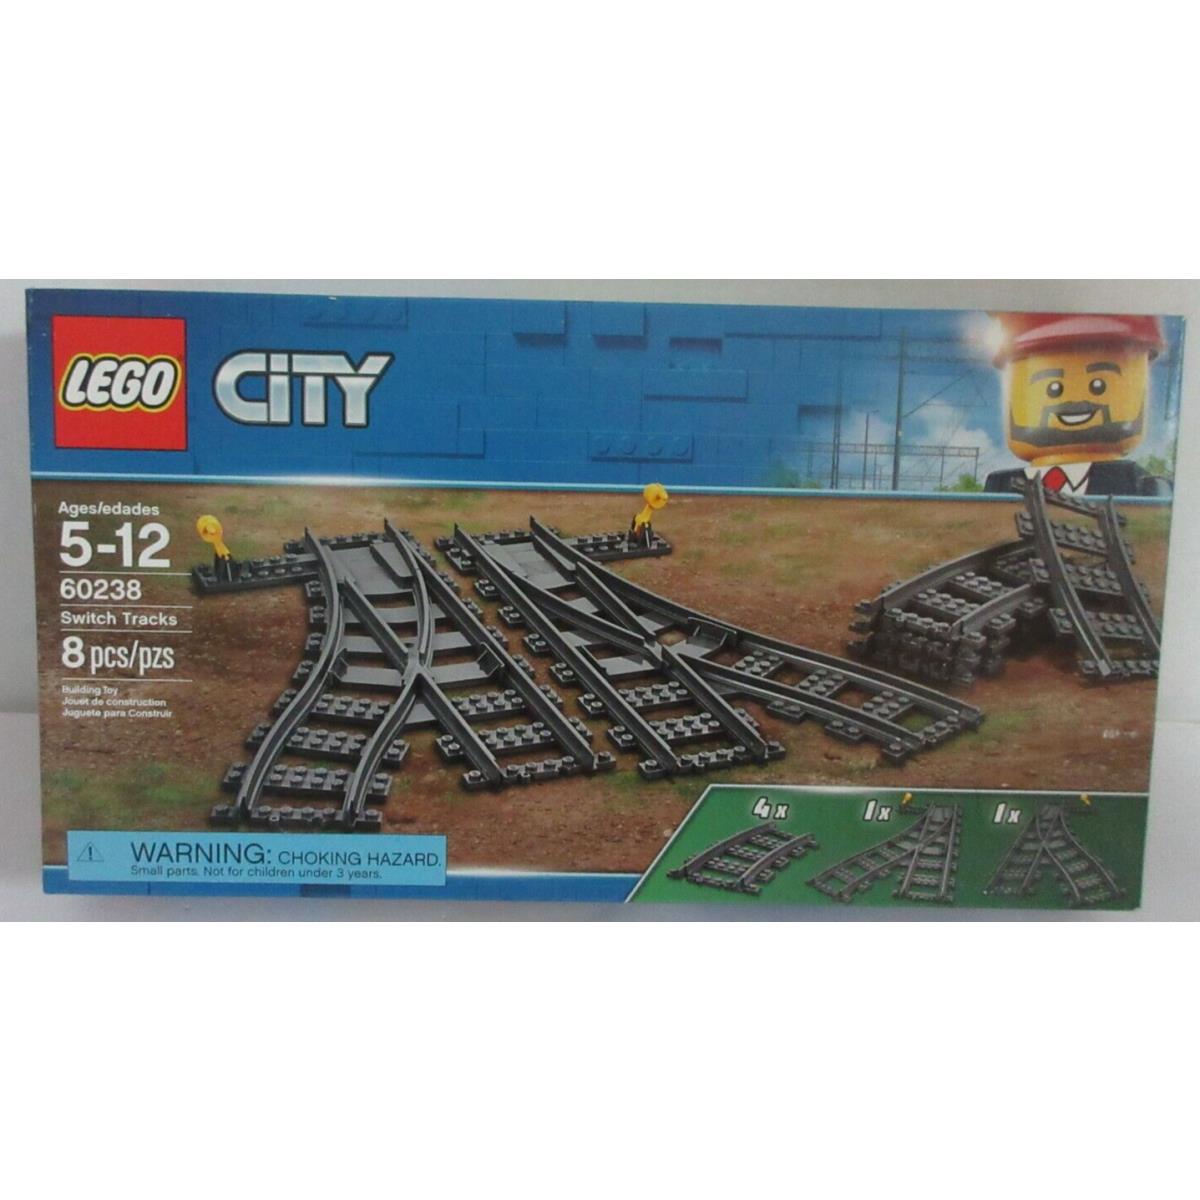 Lego City Cross Tracks Set 60238 Toy Blocks Train Gift Boys Girls 5-12